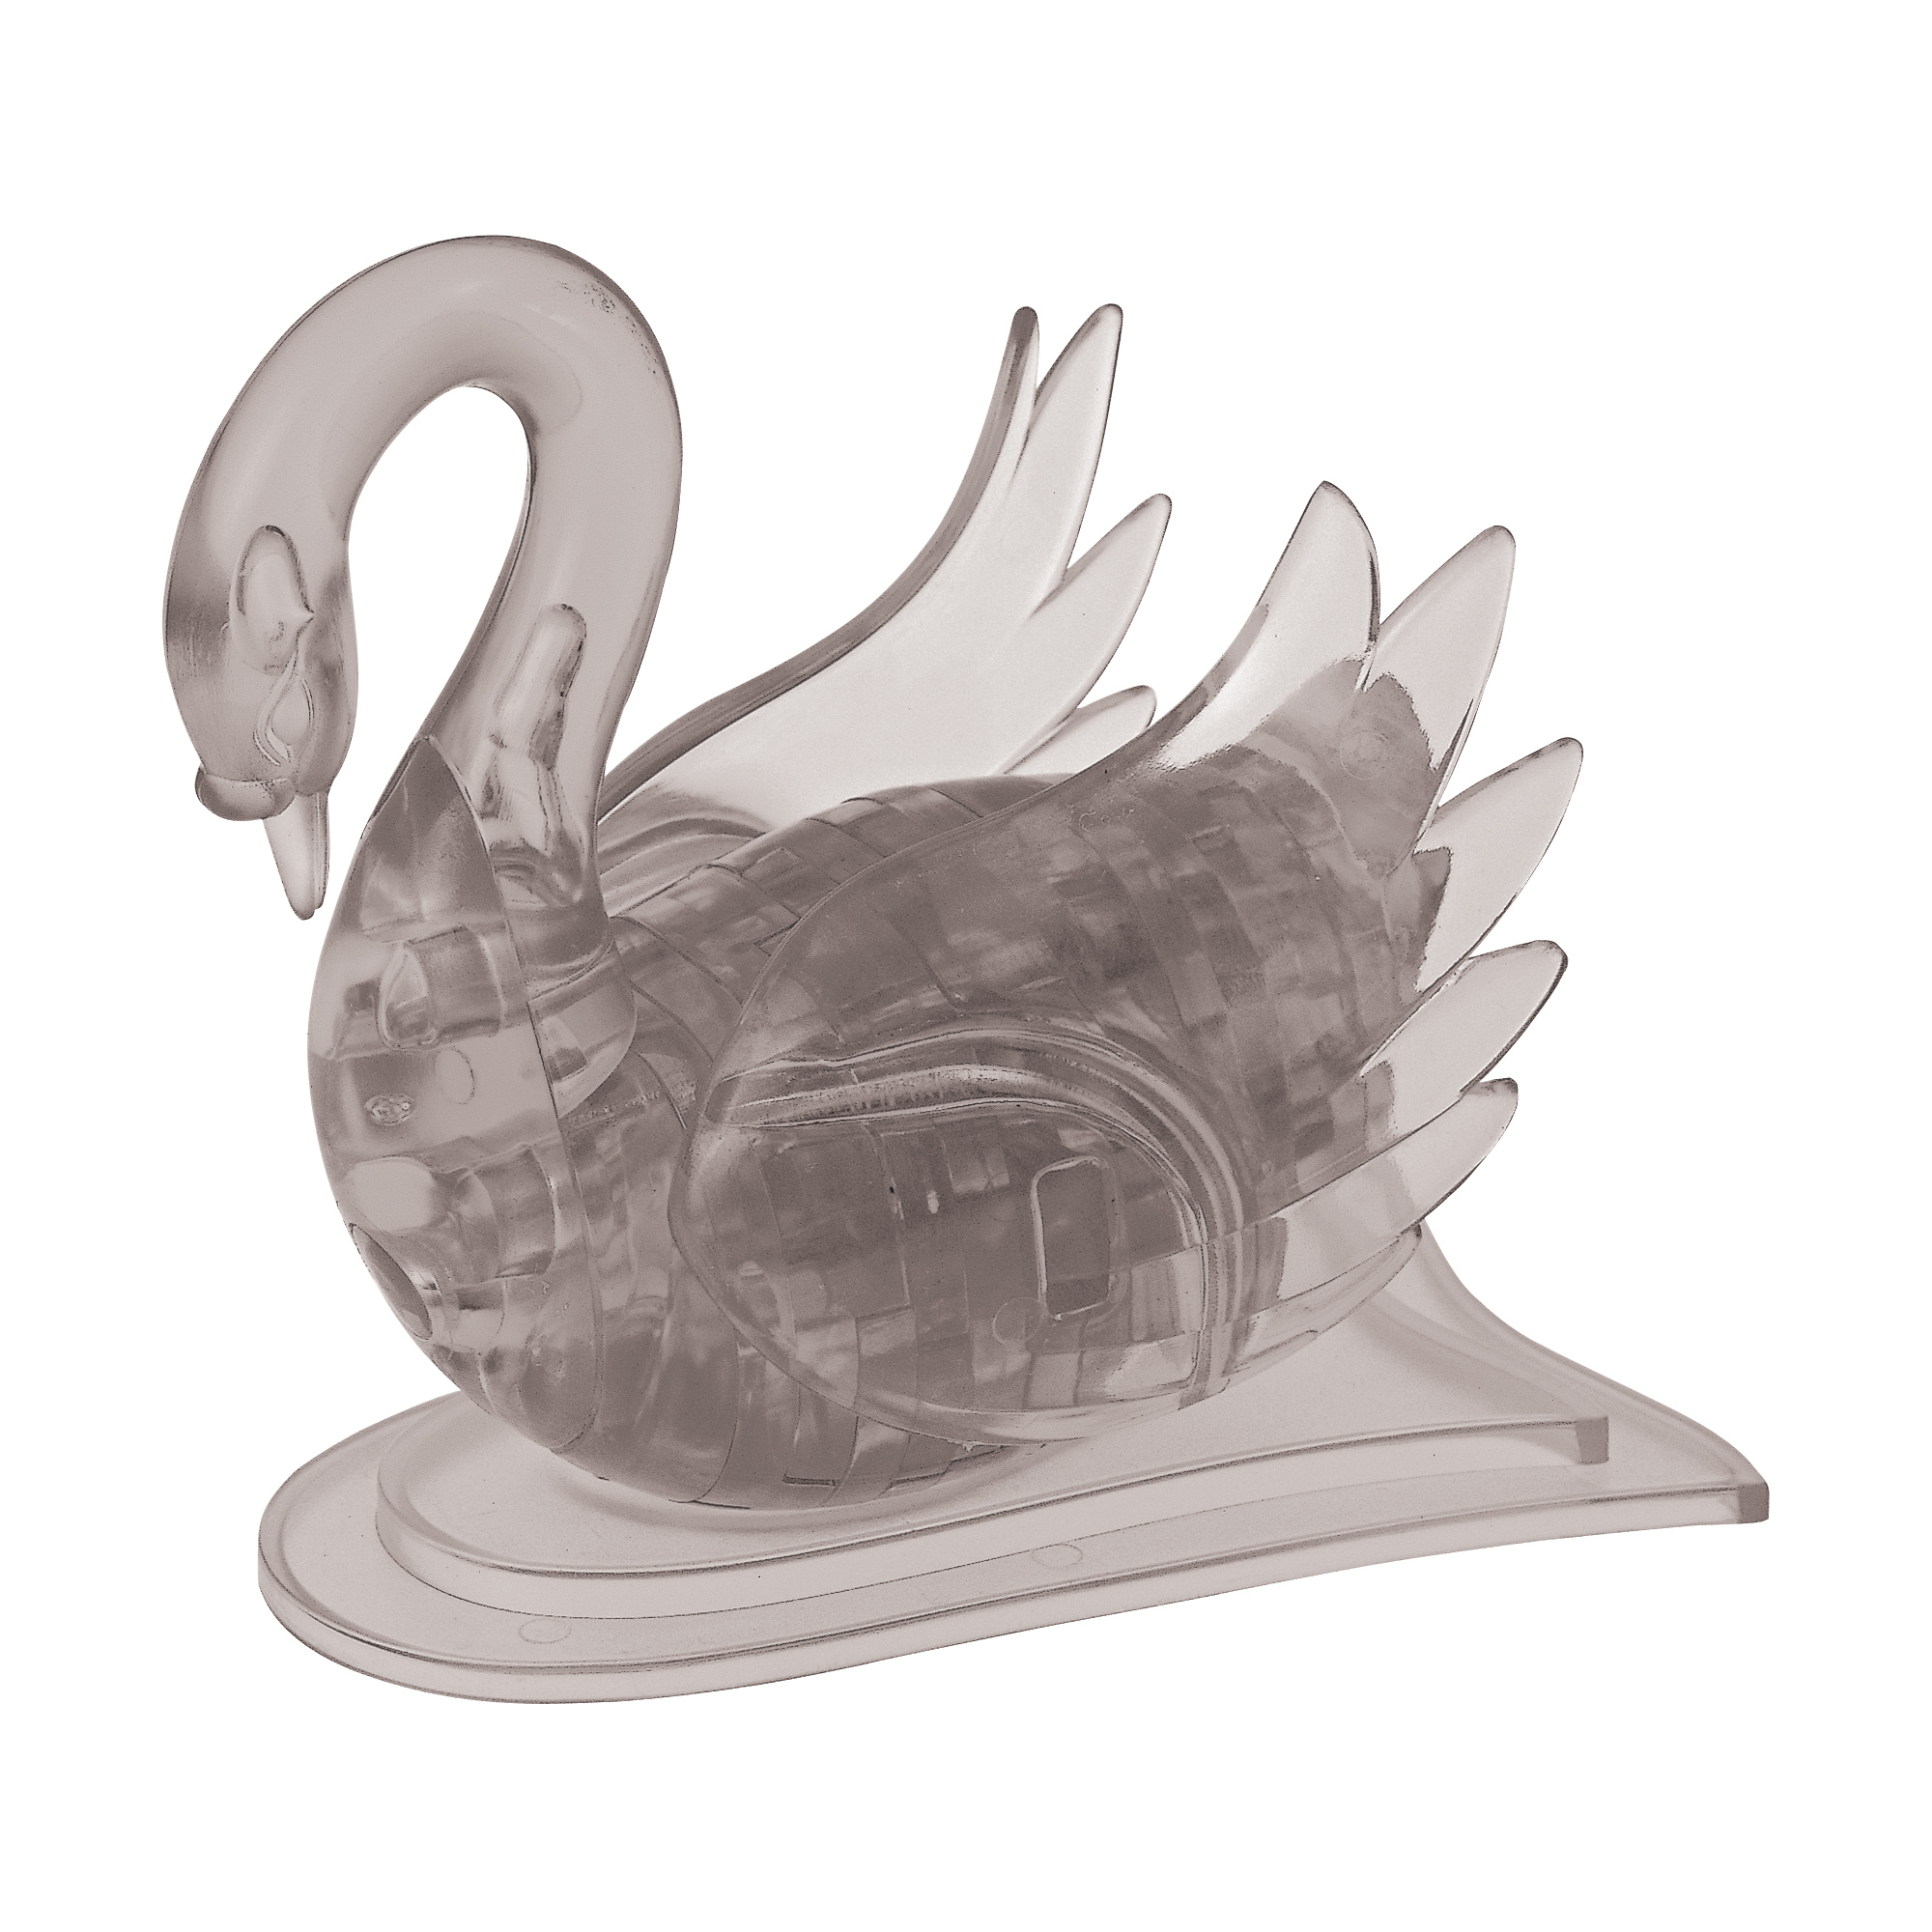 Bepuzzled 3D Crystal Puzzle - Swan (Black): 43 Pcs